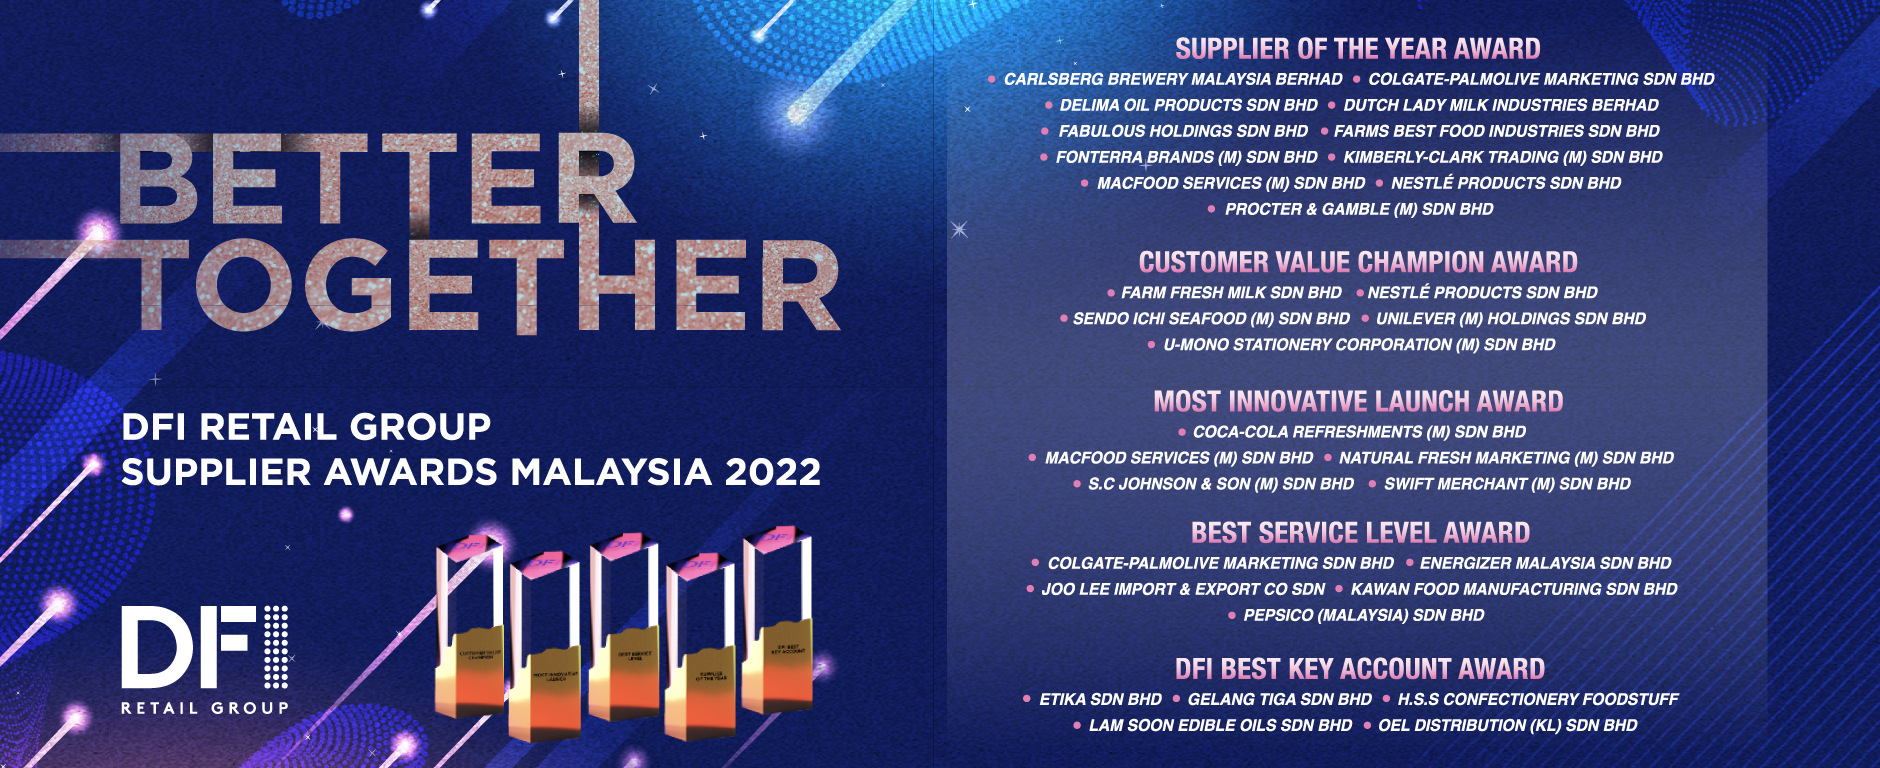 DFI Retail Group Supplier Awards Malaysia 2022